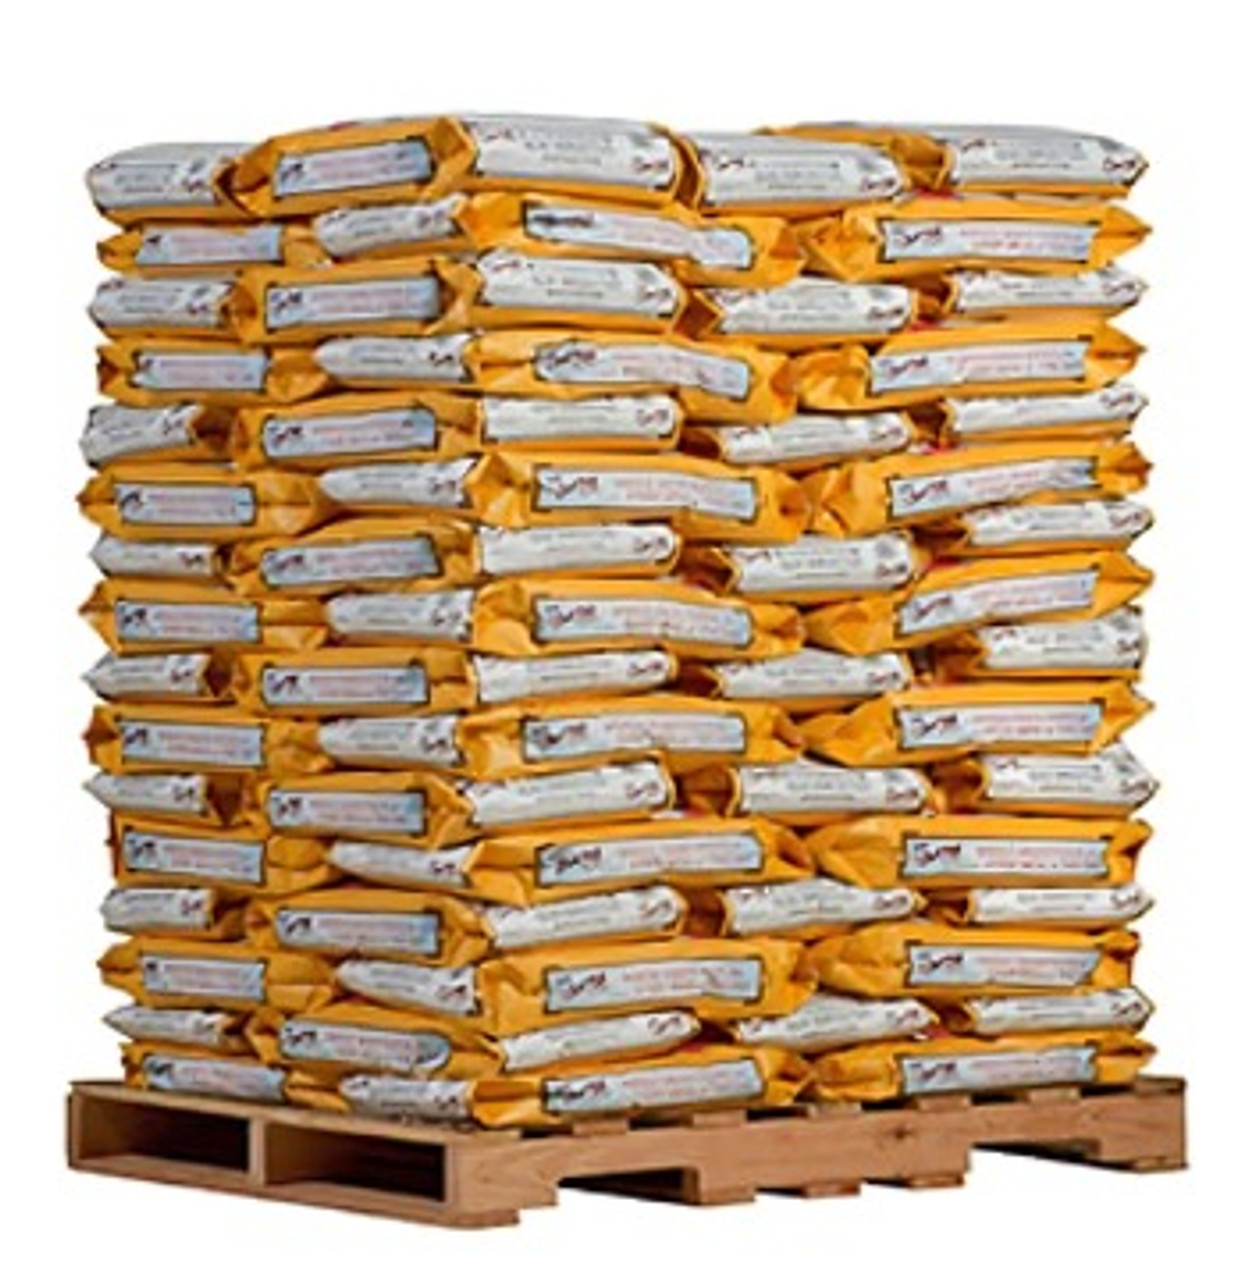 Bob's Red Mill 25 lbs. (11.34 kg) Organic Whole Grain Buckwheat Flour (60 BAGS/PALLET) - Chicken Pieces